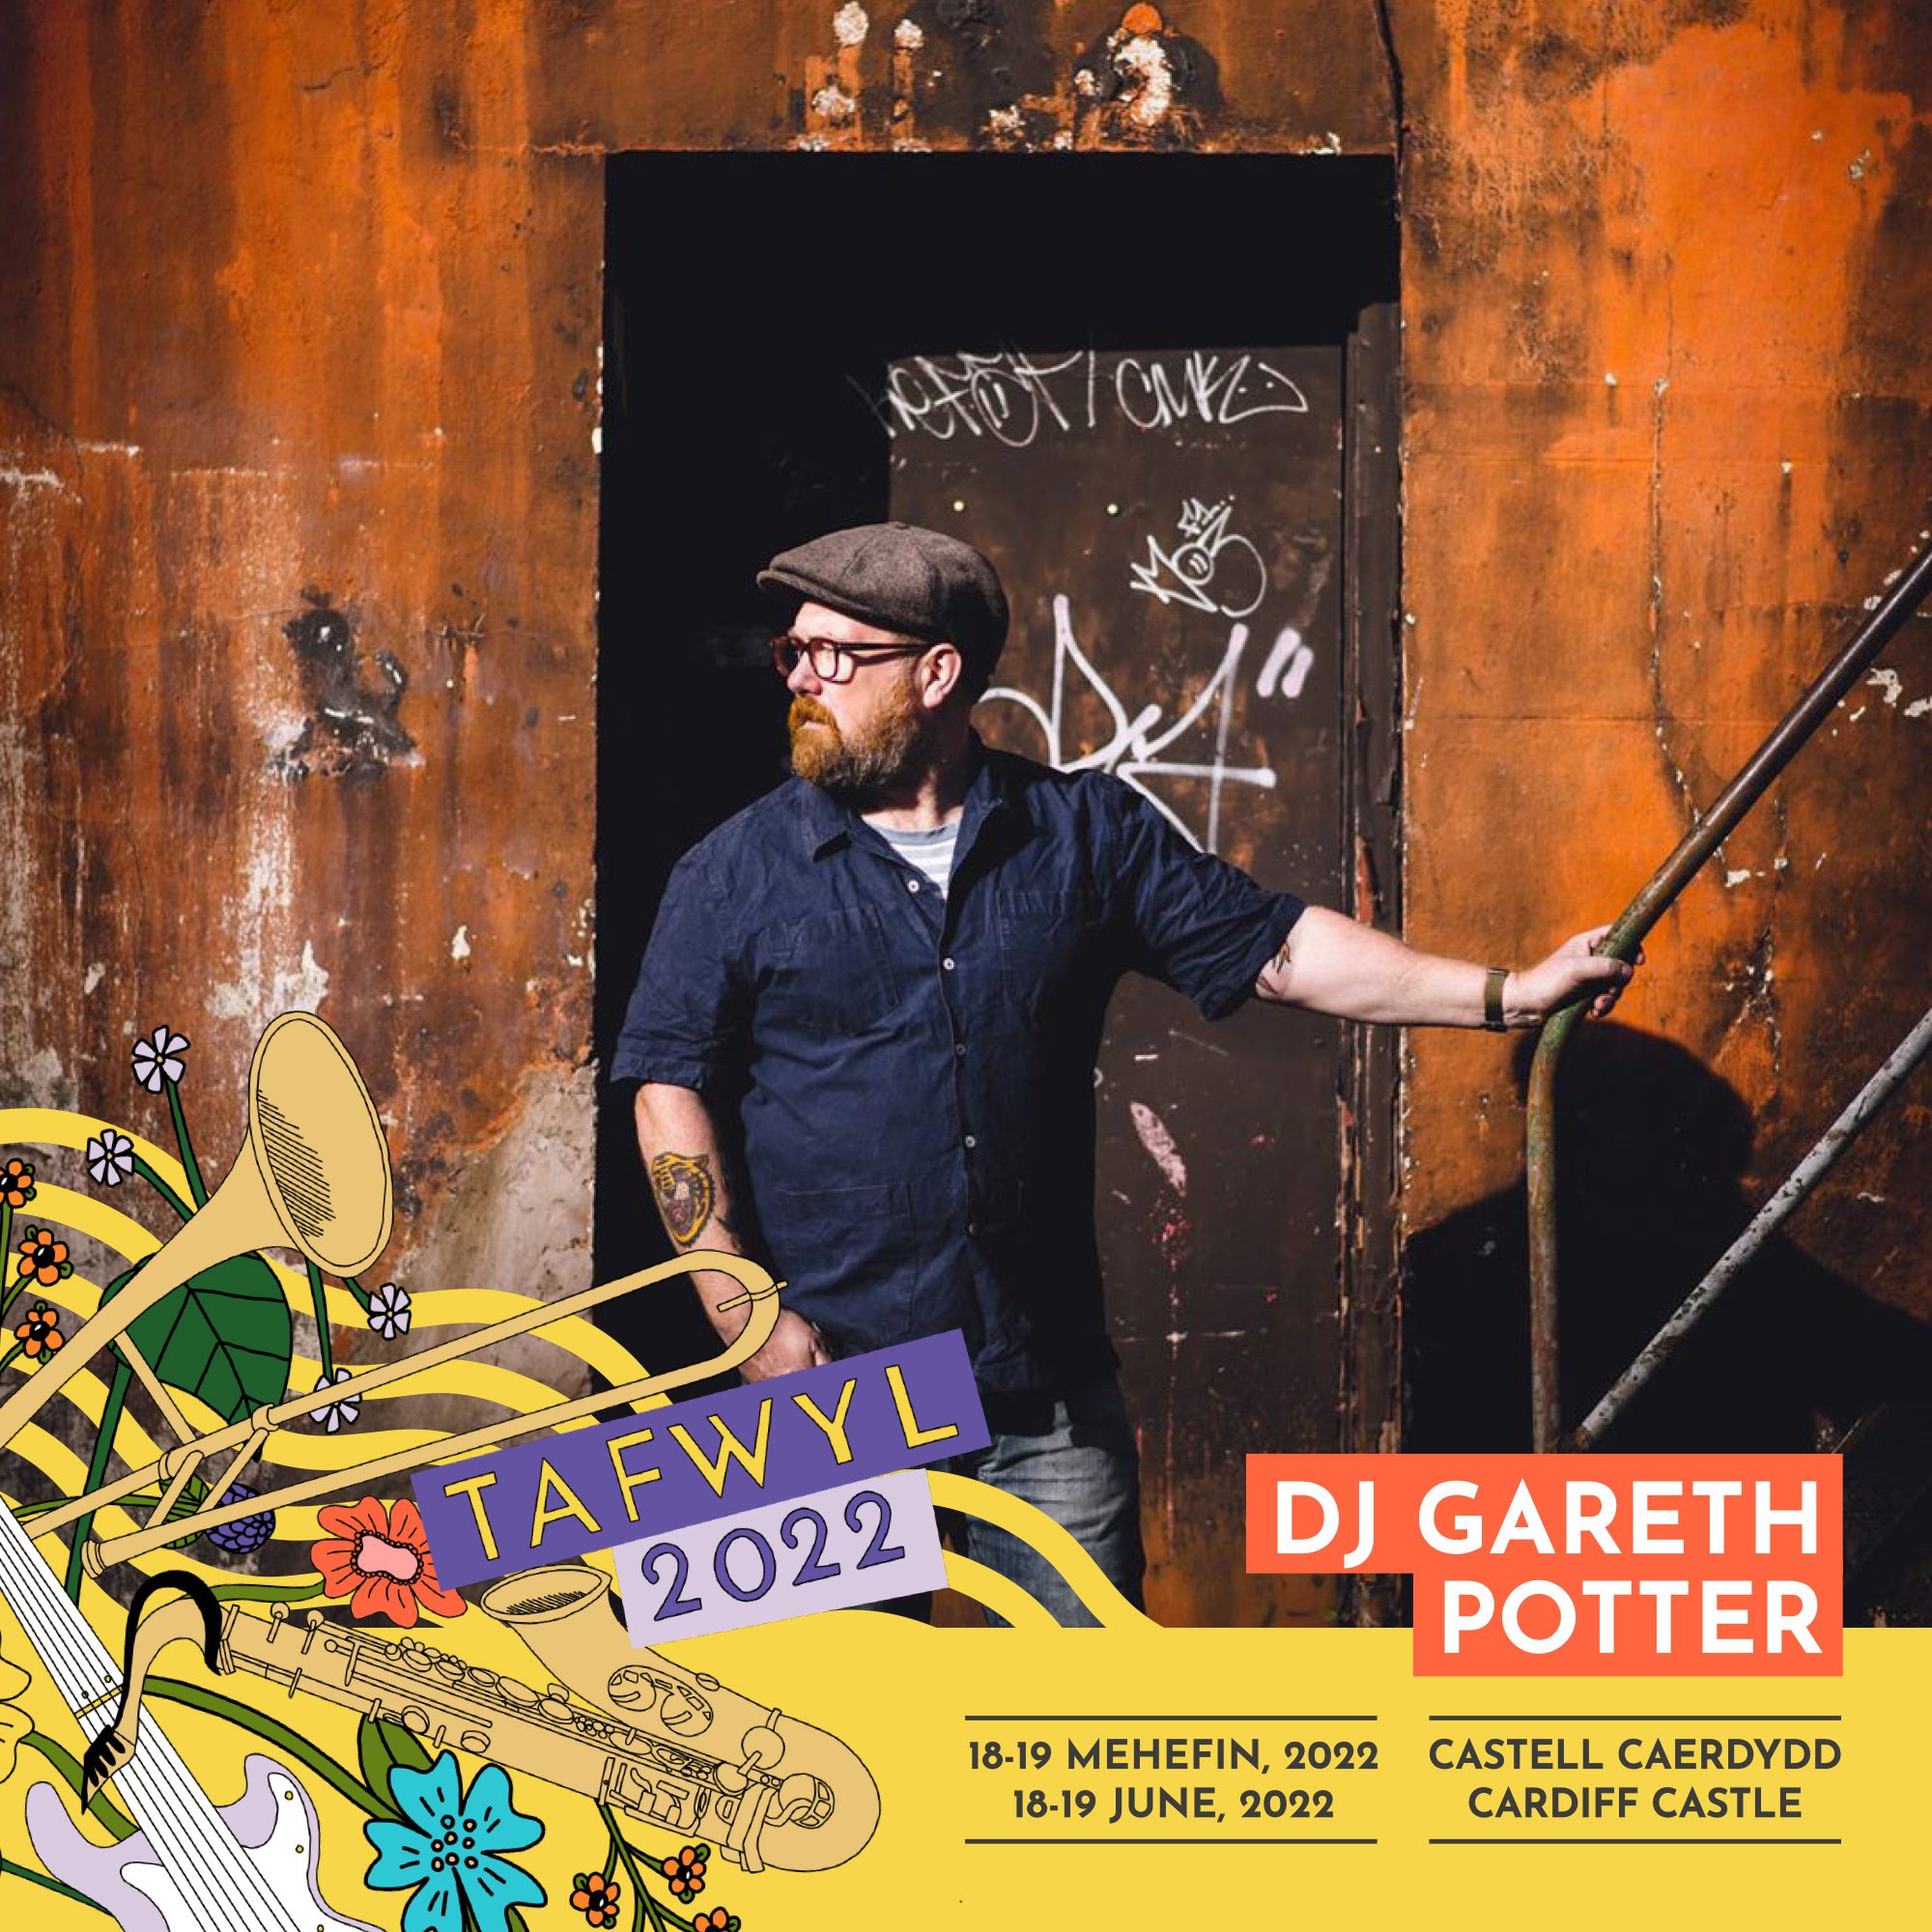 DJ Gareth Potter